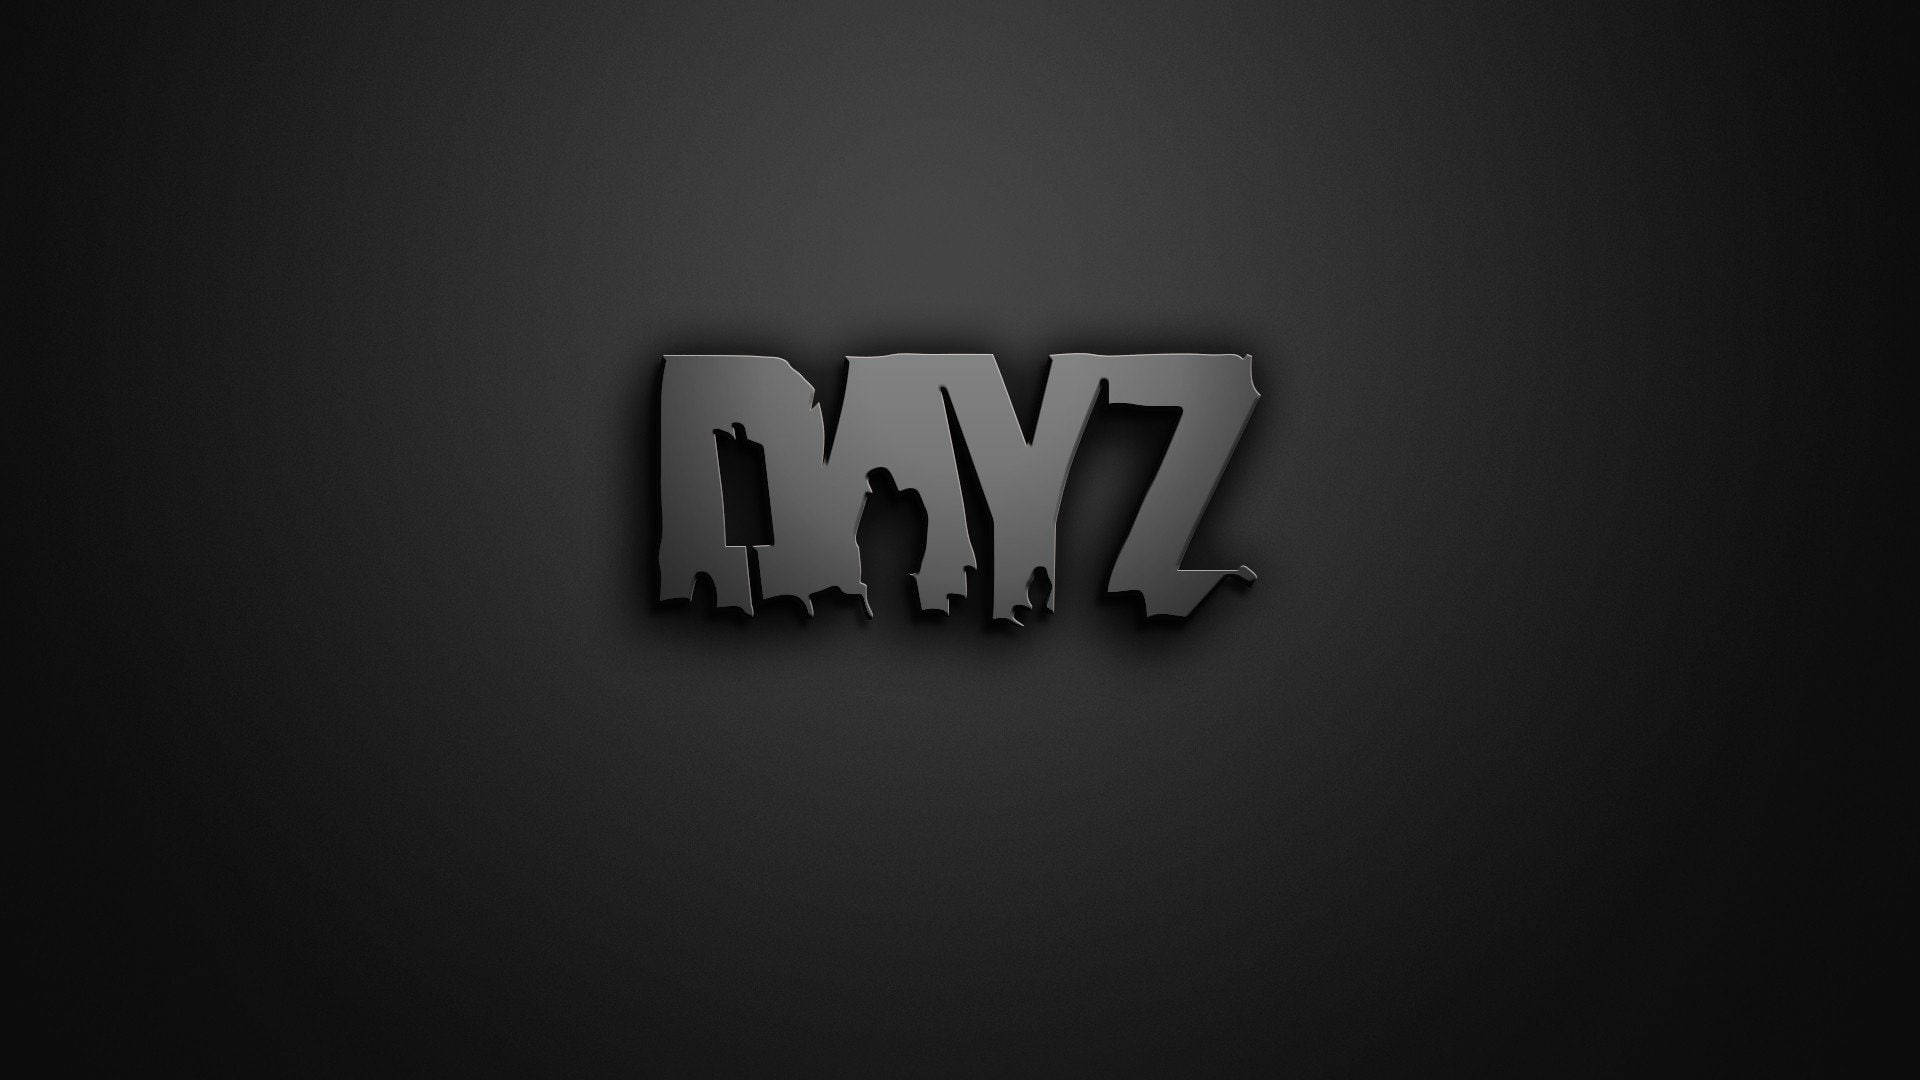 Gray Dayz Desktop Wordmark Picture